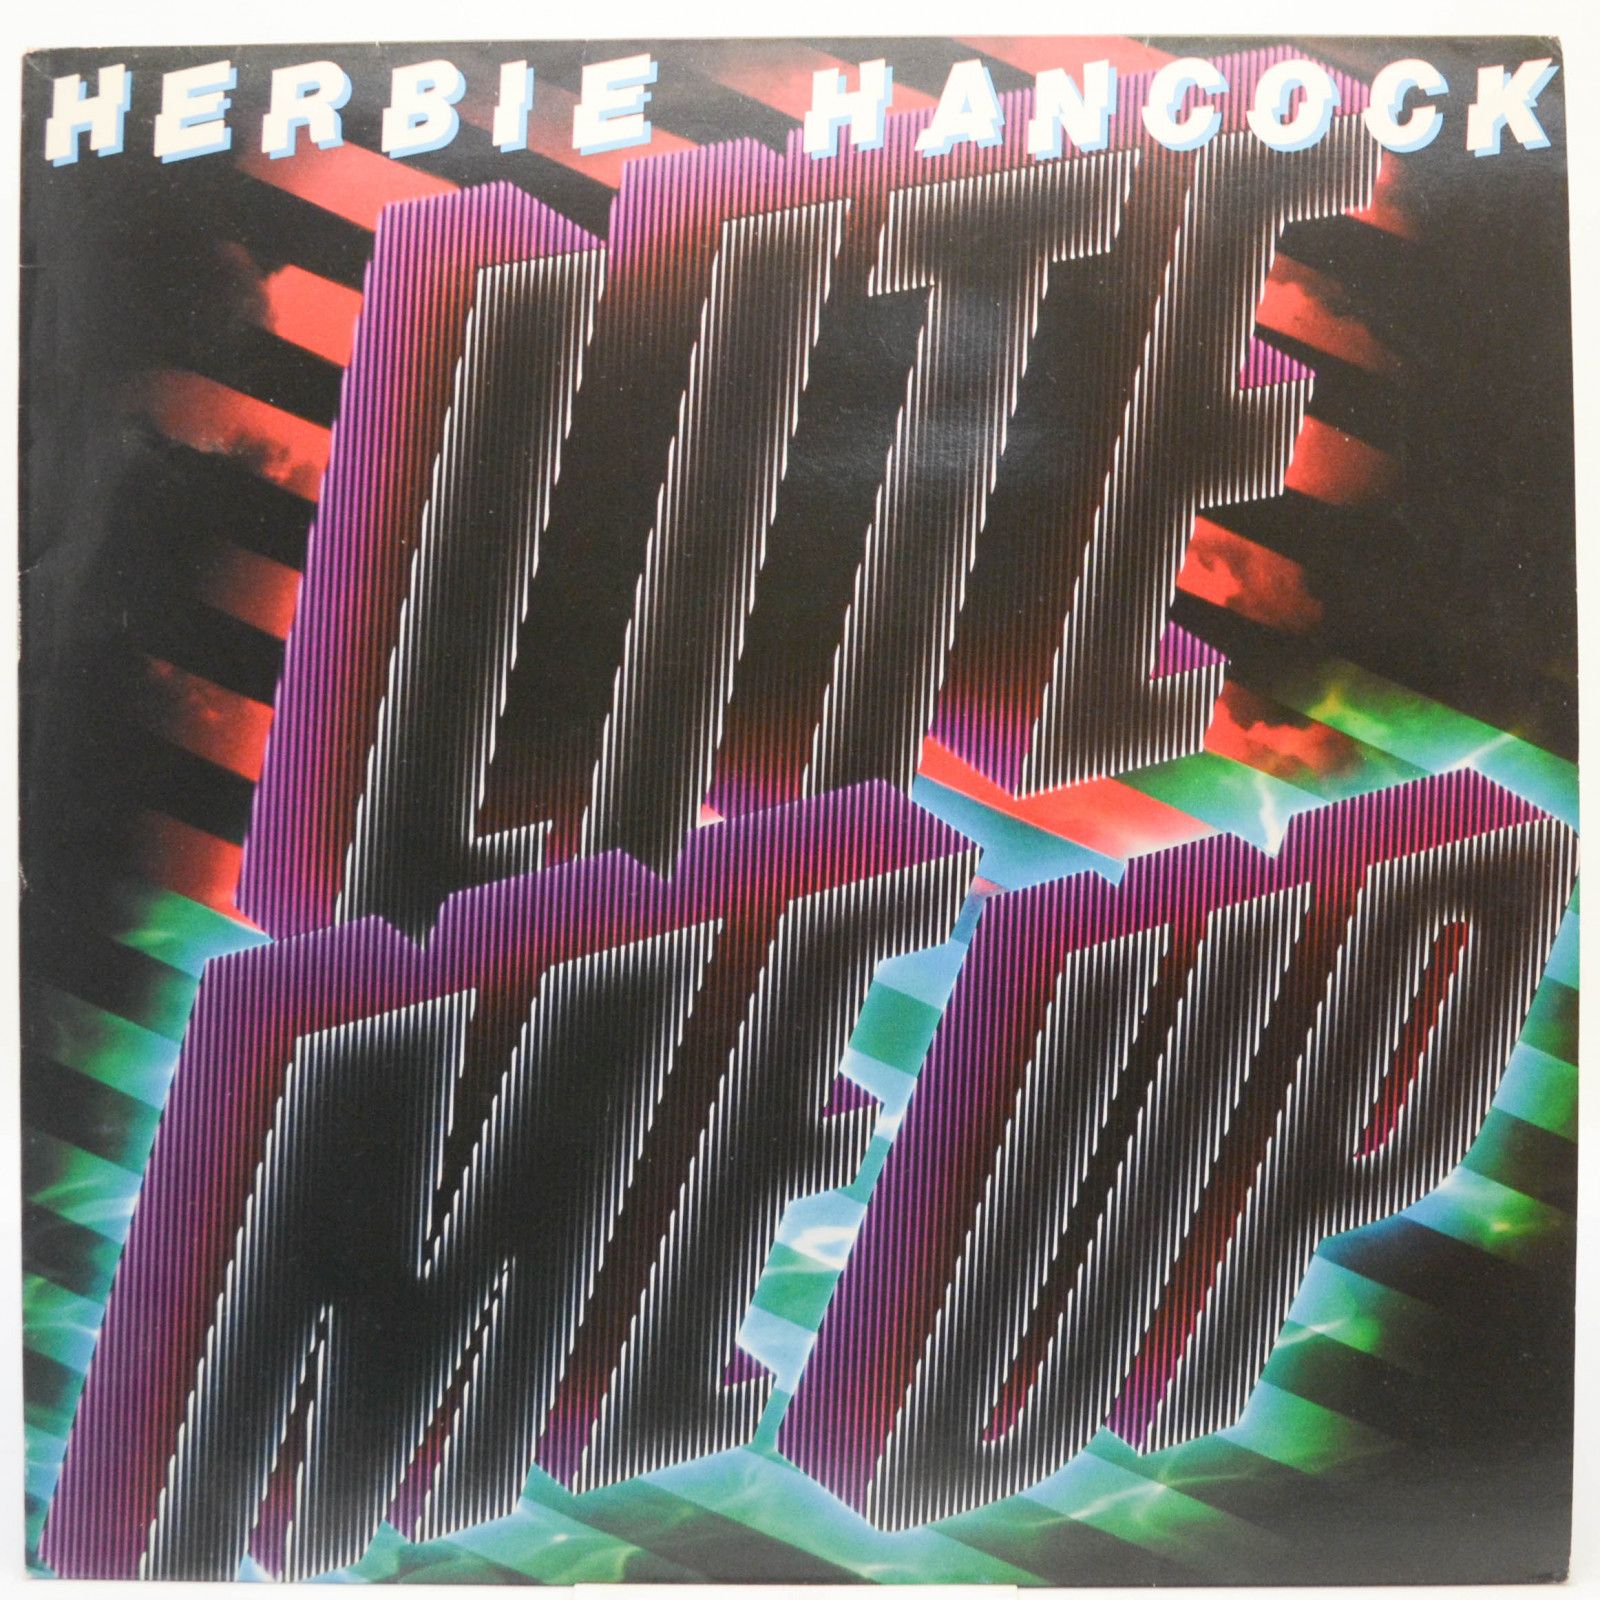 Herbie Hancock — Lite Me Up, 1982